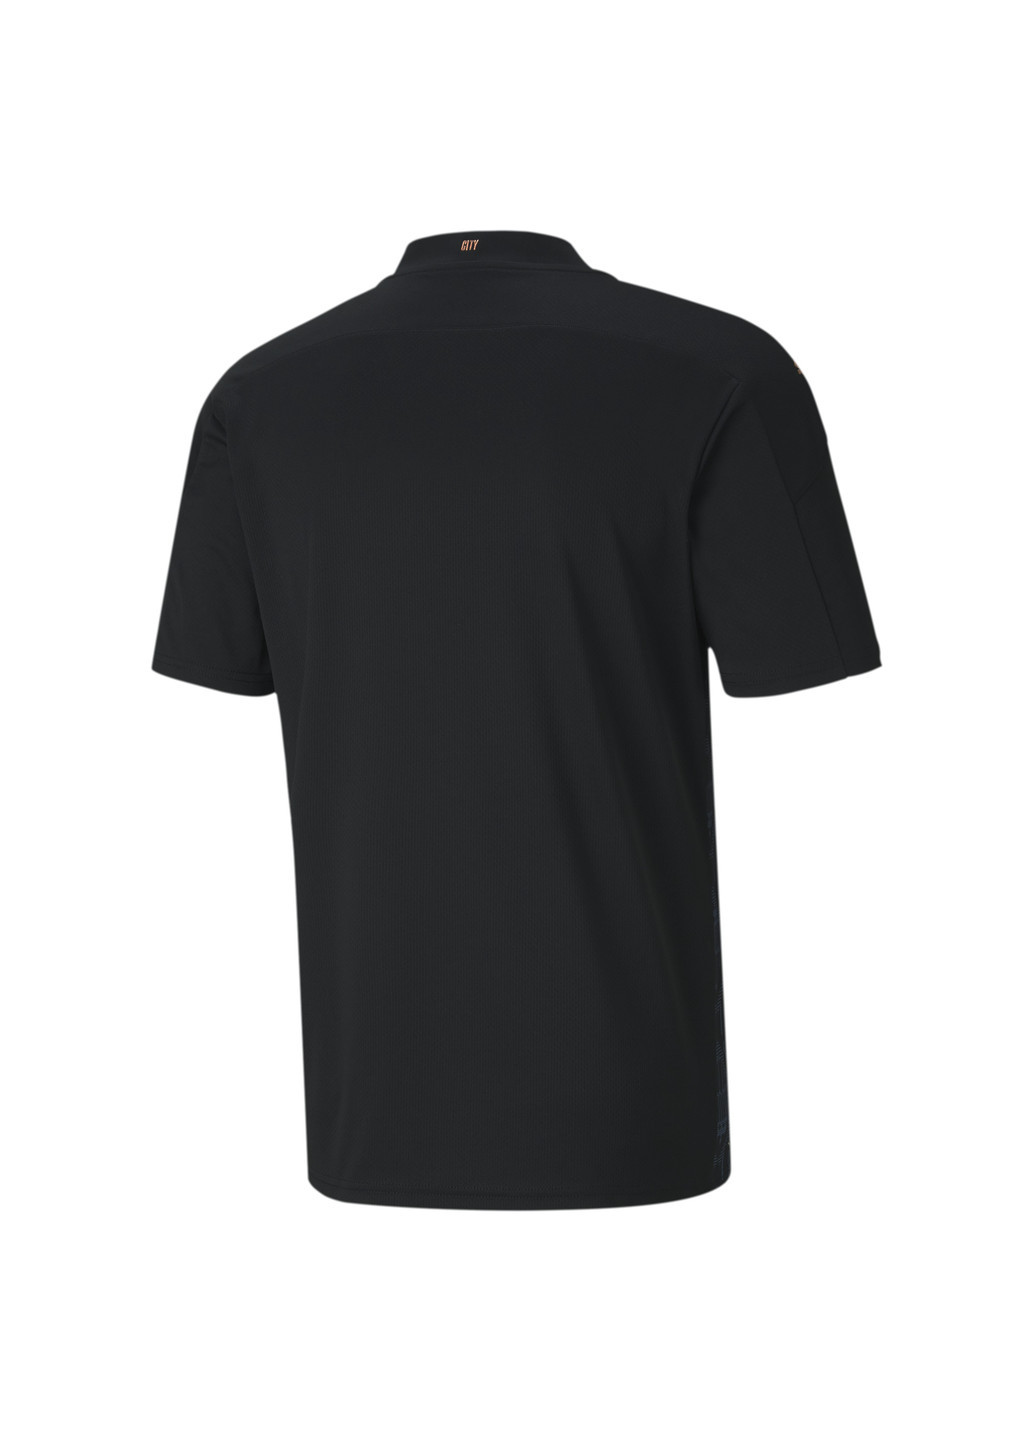 Черная демисезонная футболка mcfc away shirt replica Puma